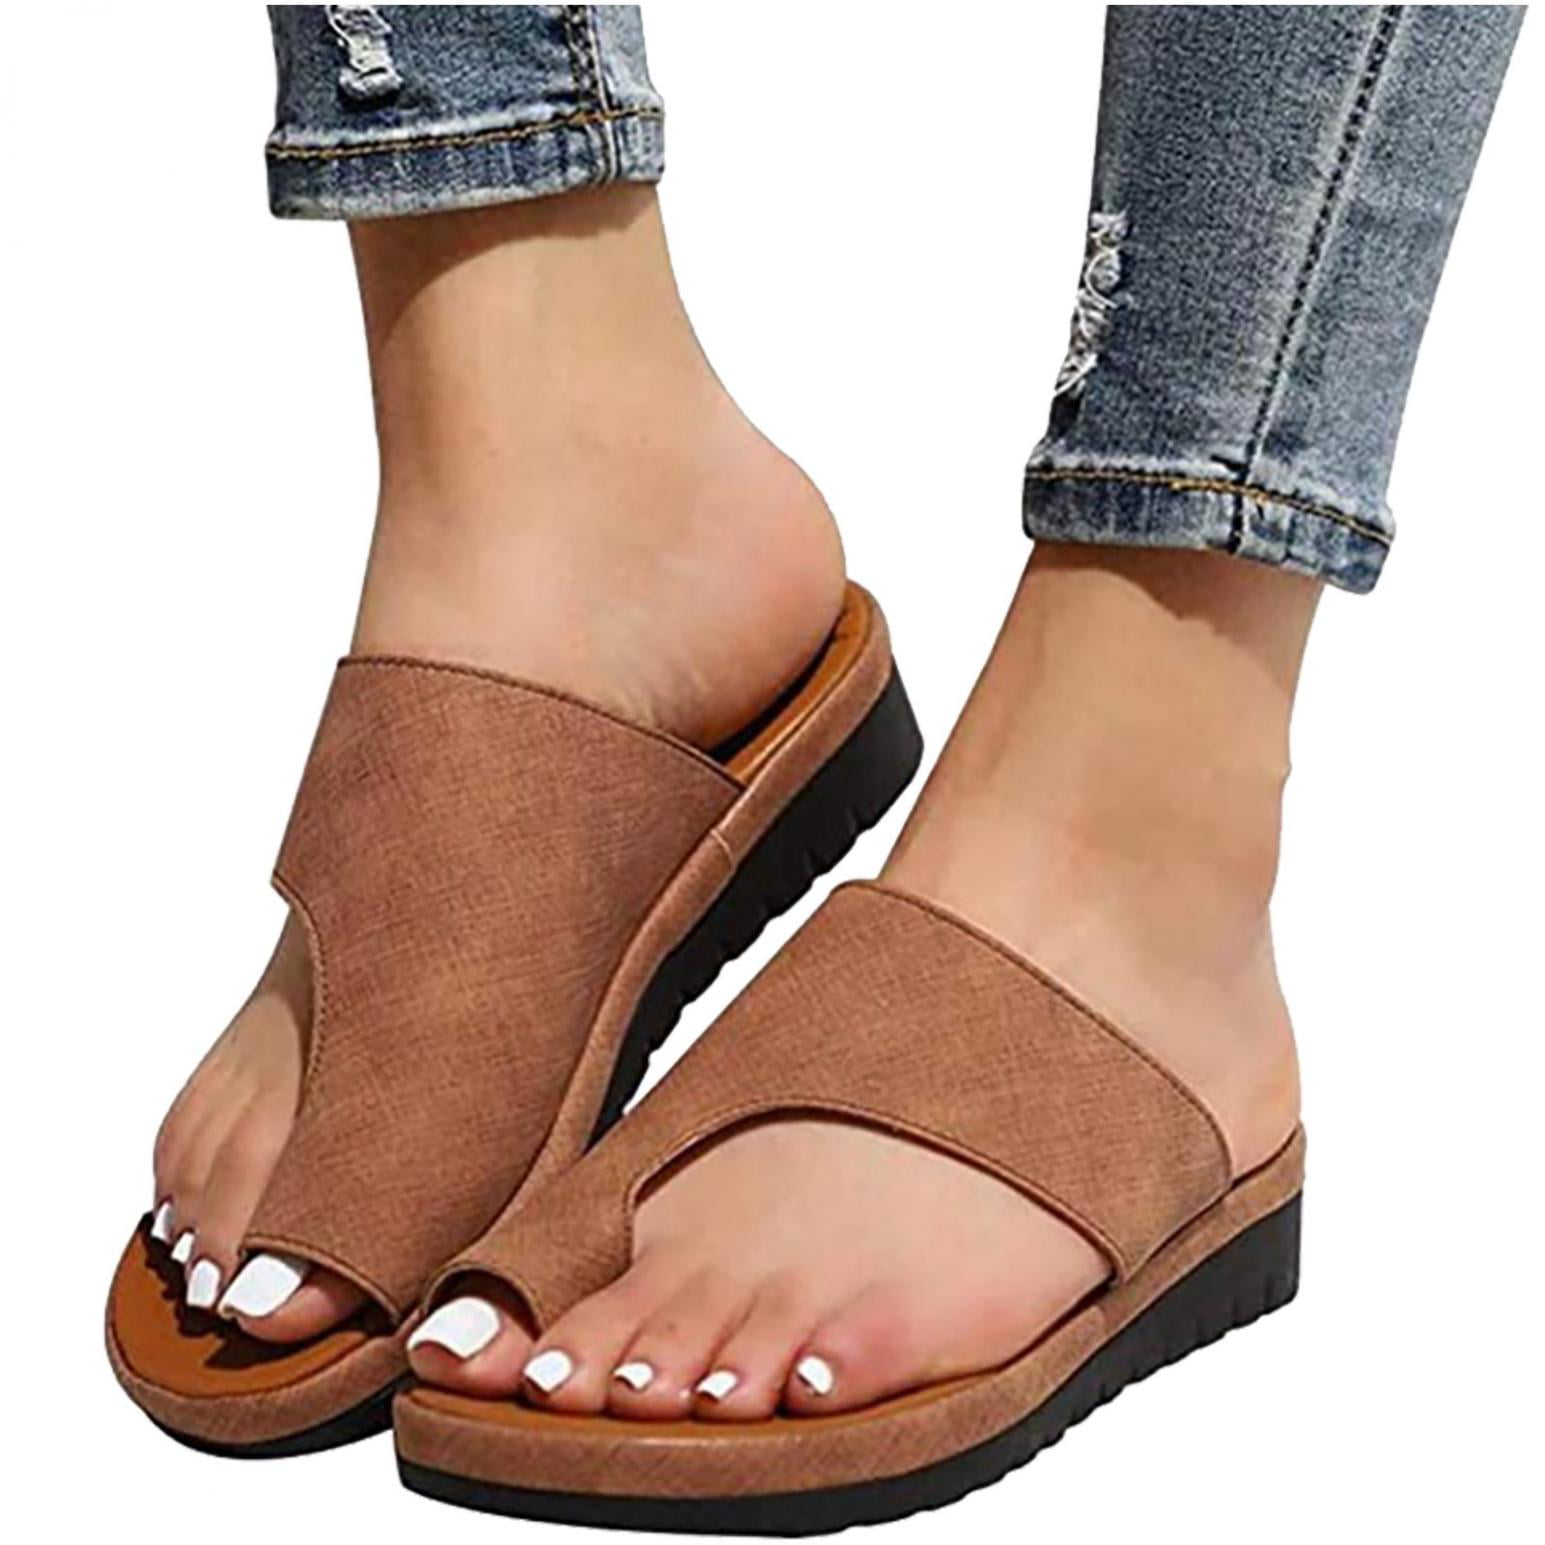 Womens Slip On Wedges Ladies Comfy Light Platform High Heel Shoes Sandals Size 